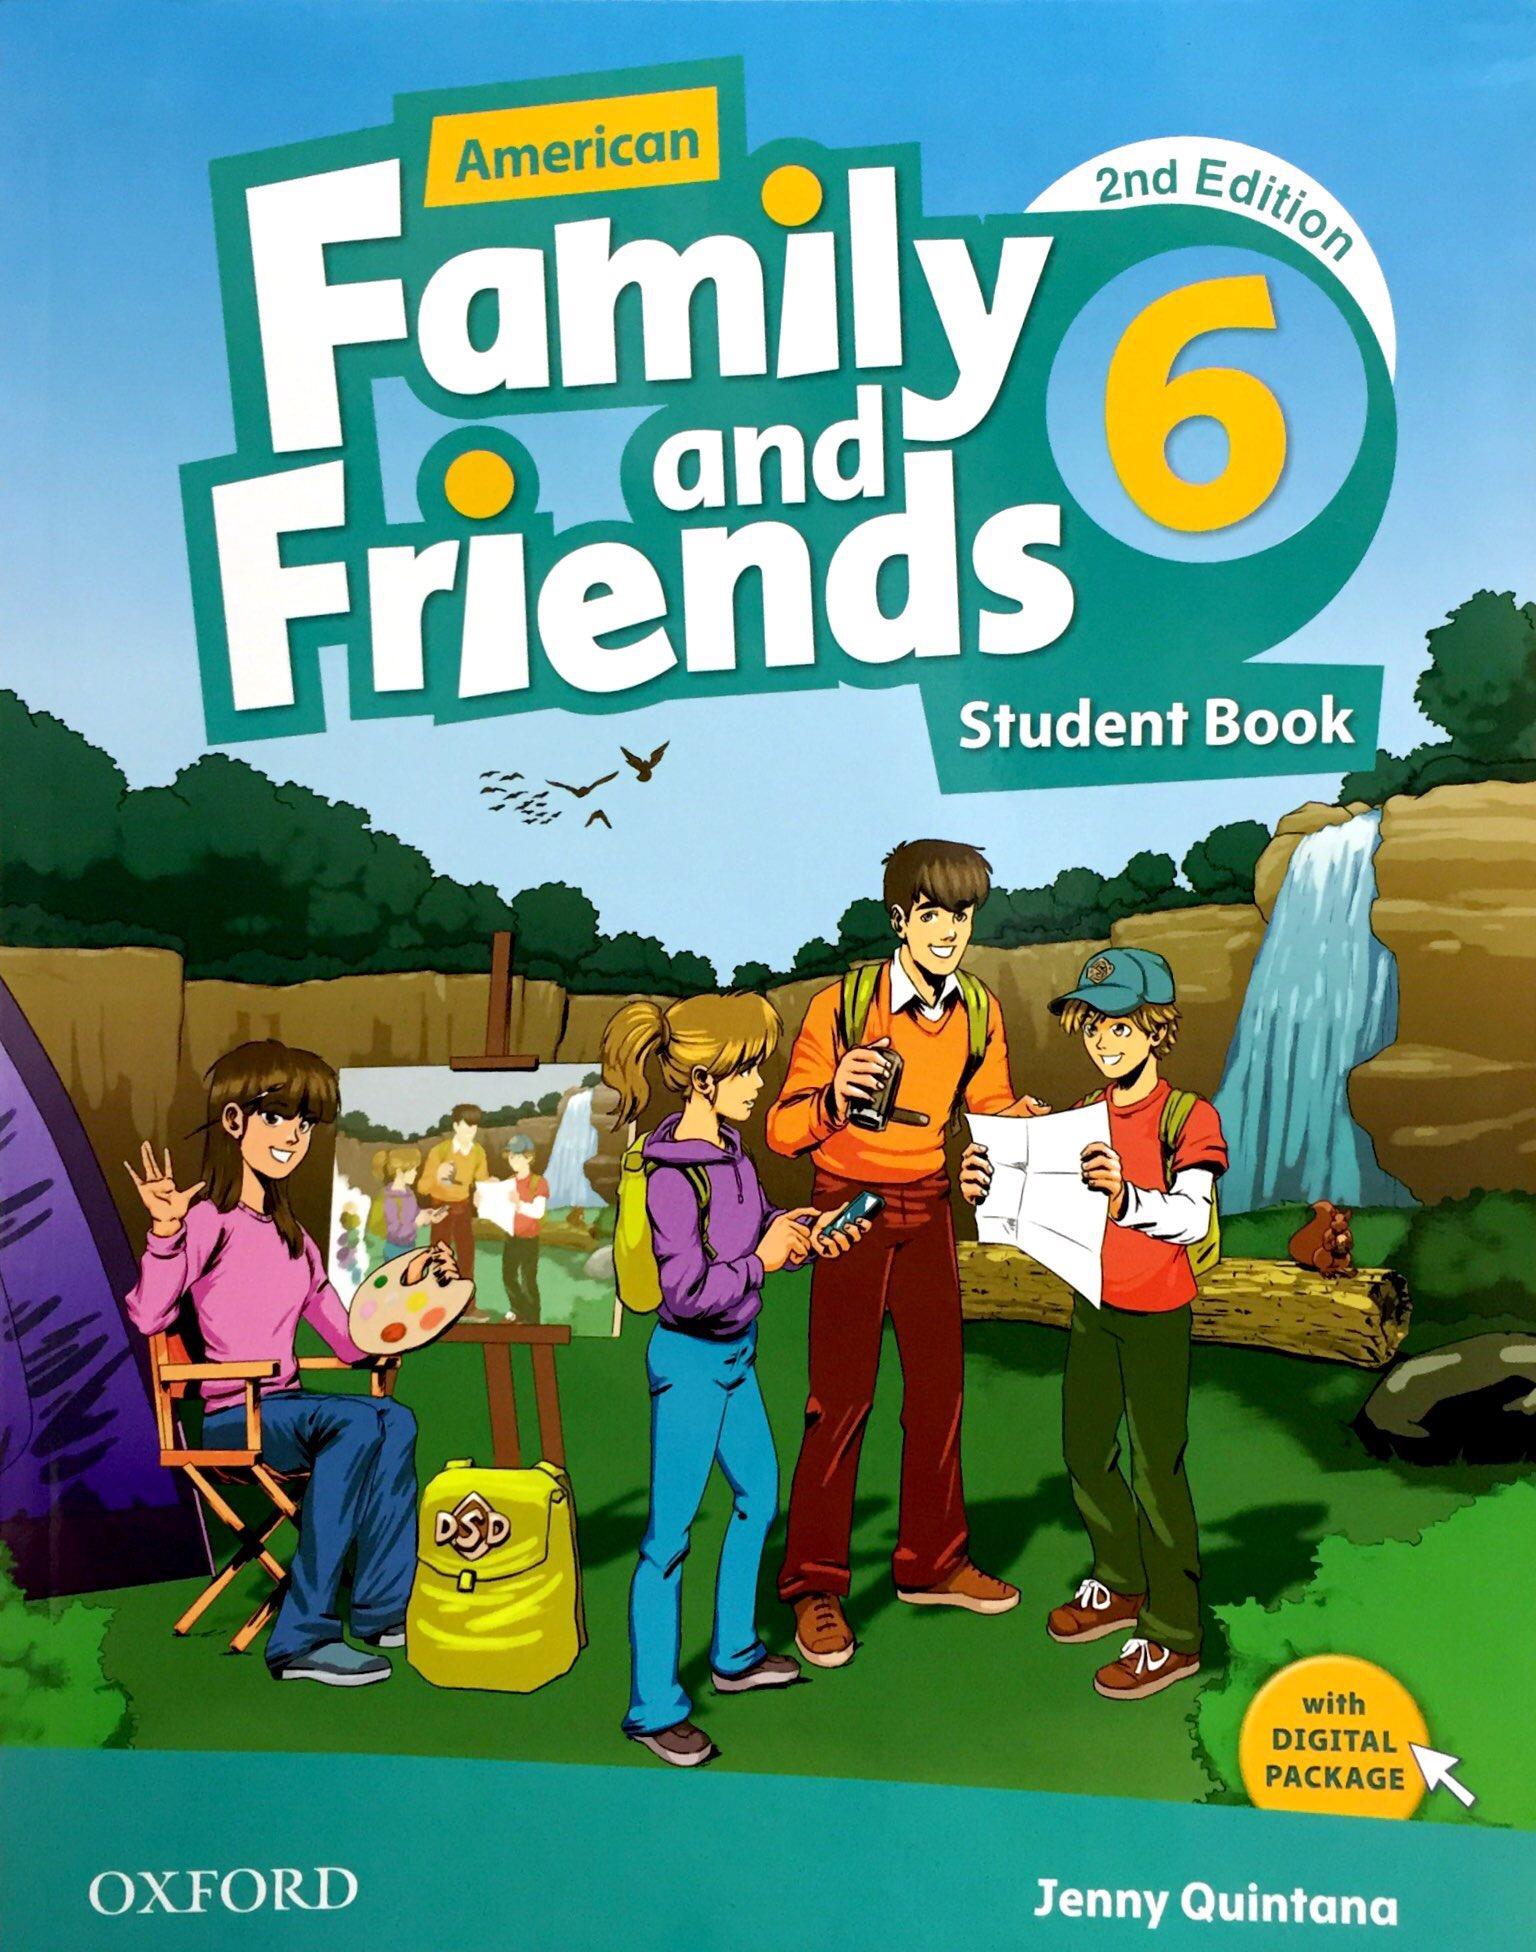 AM F & F 6: STUDENT BOOK